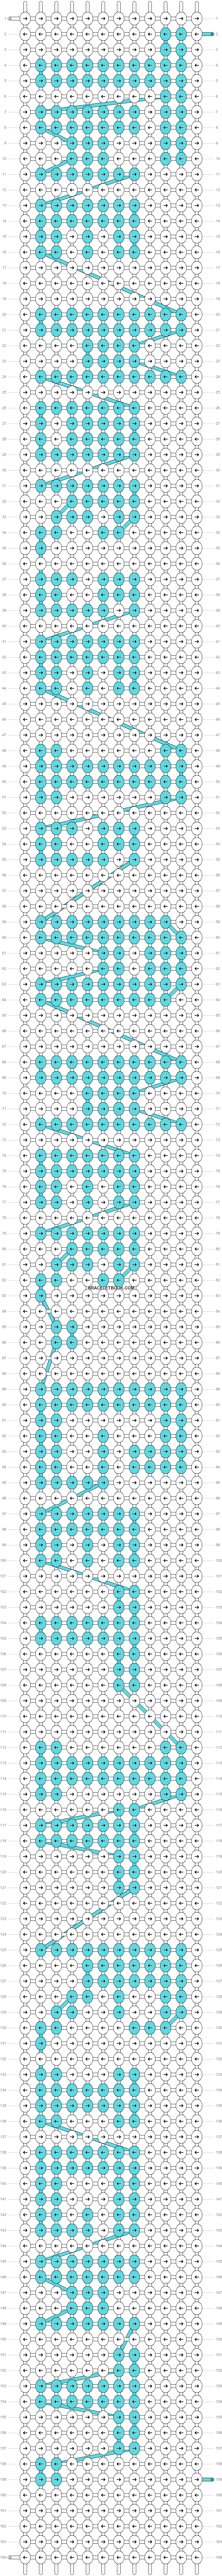 Alpha pattern #1858 pattern